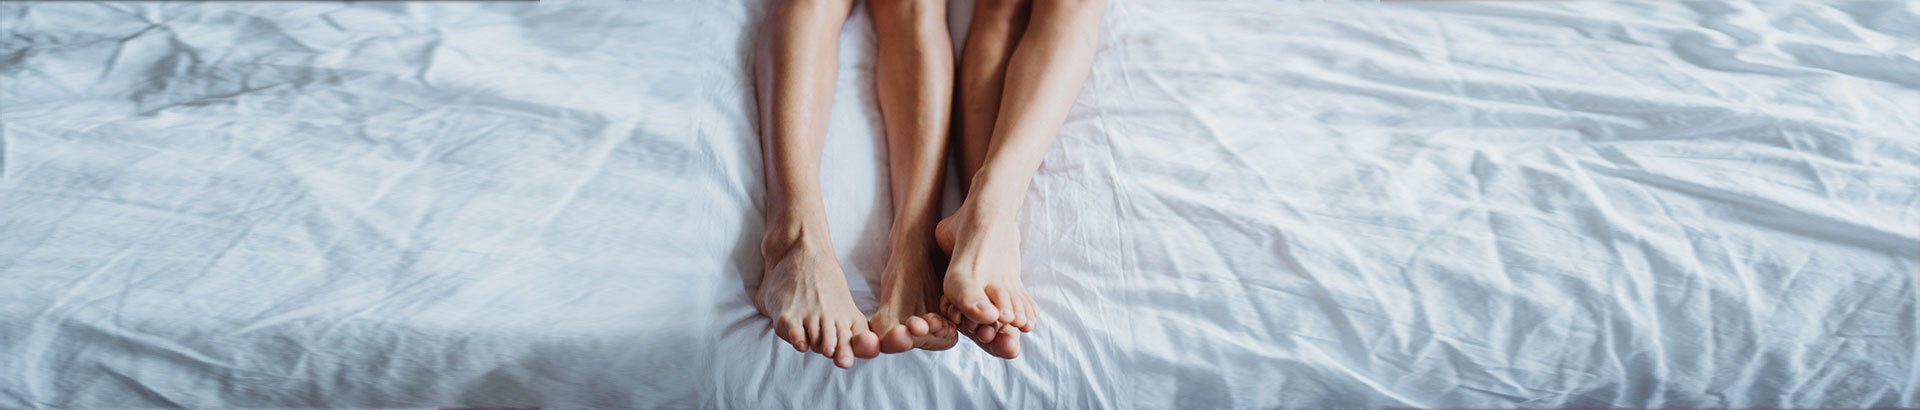 Couple reducing the risk of sleep apnea through bed sharing